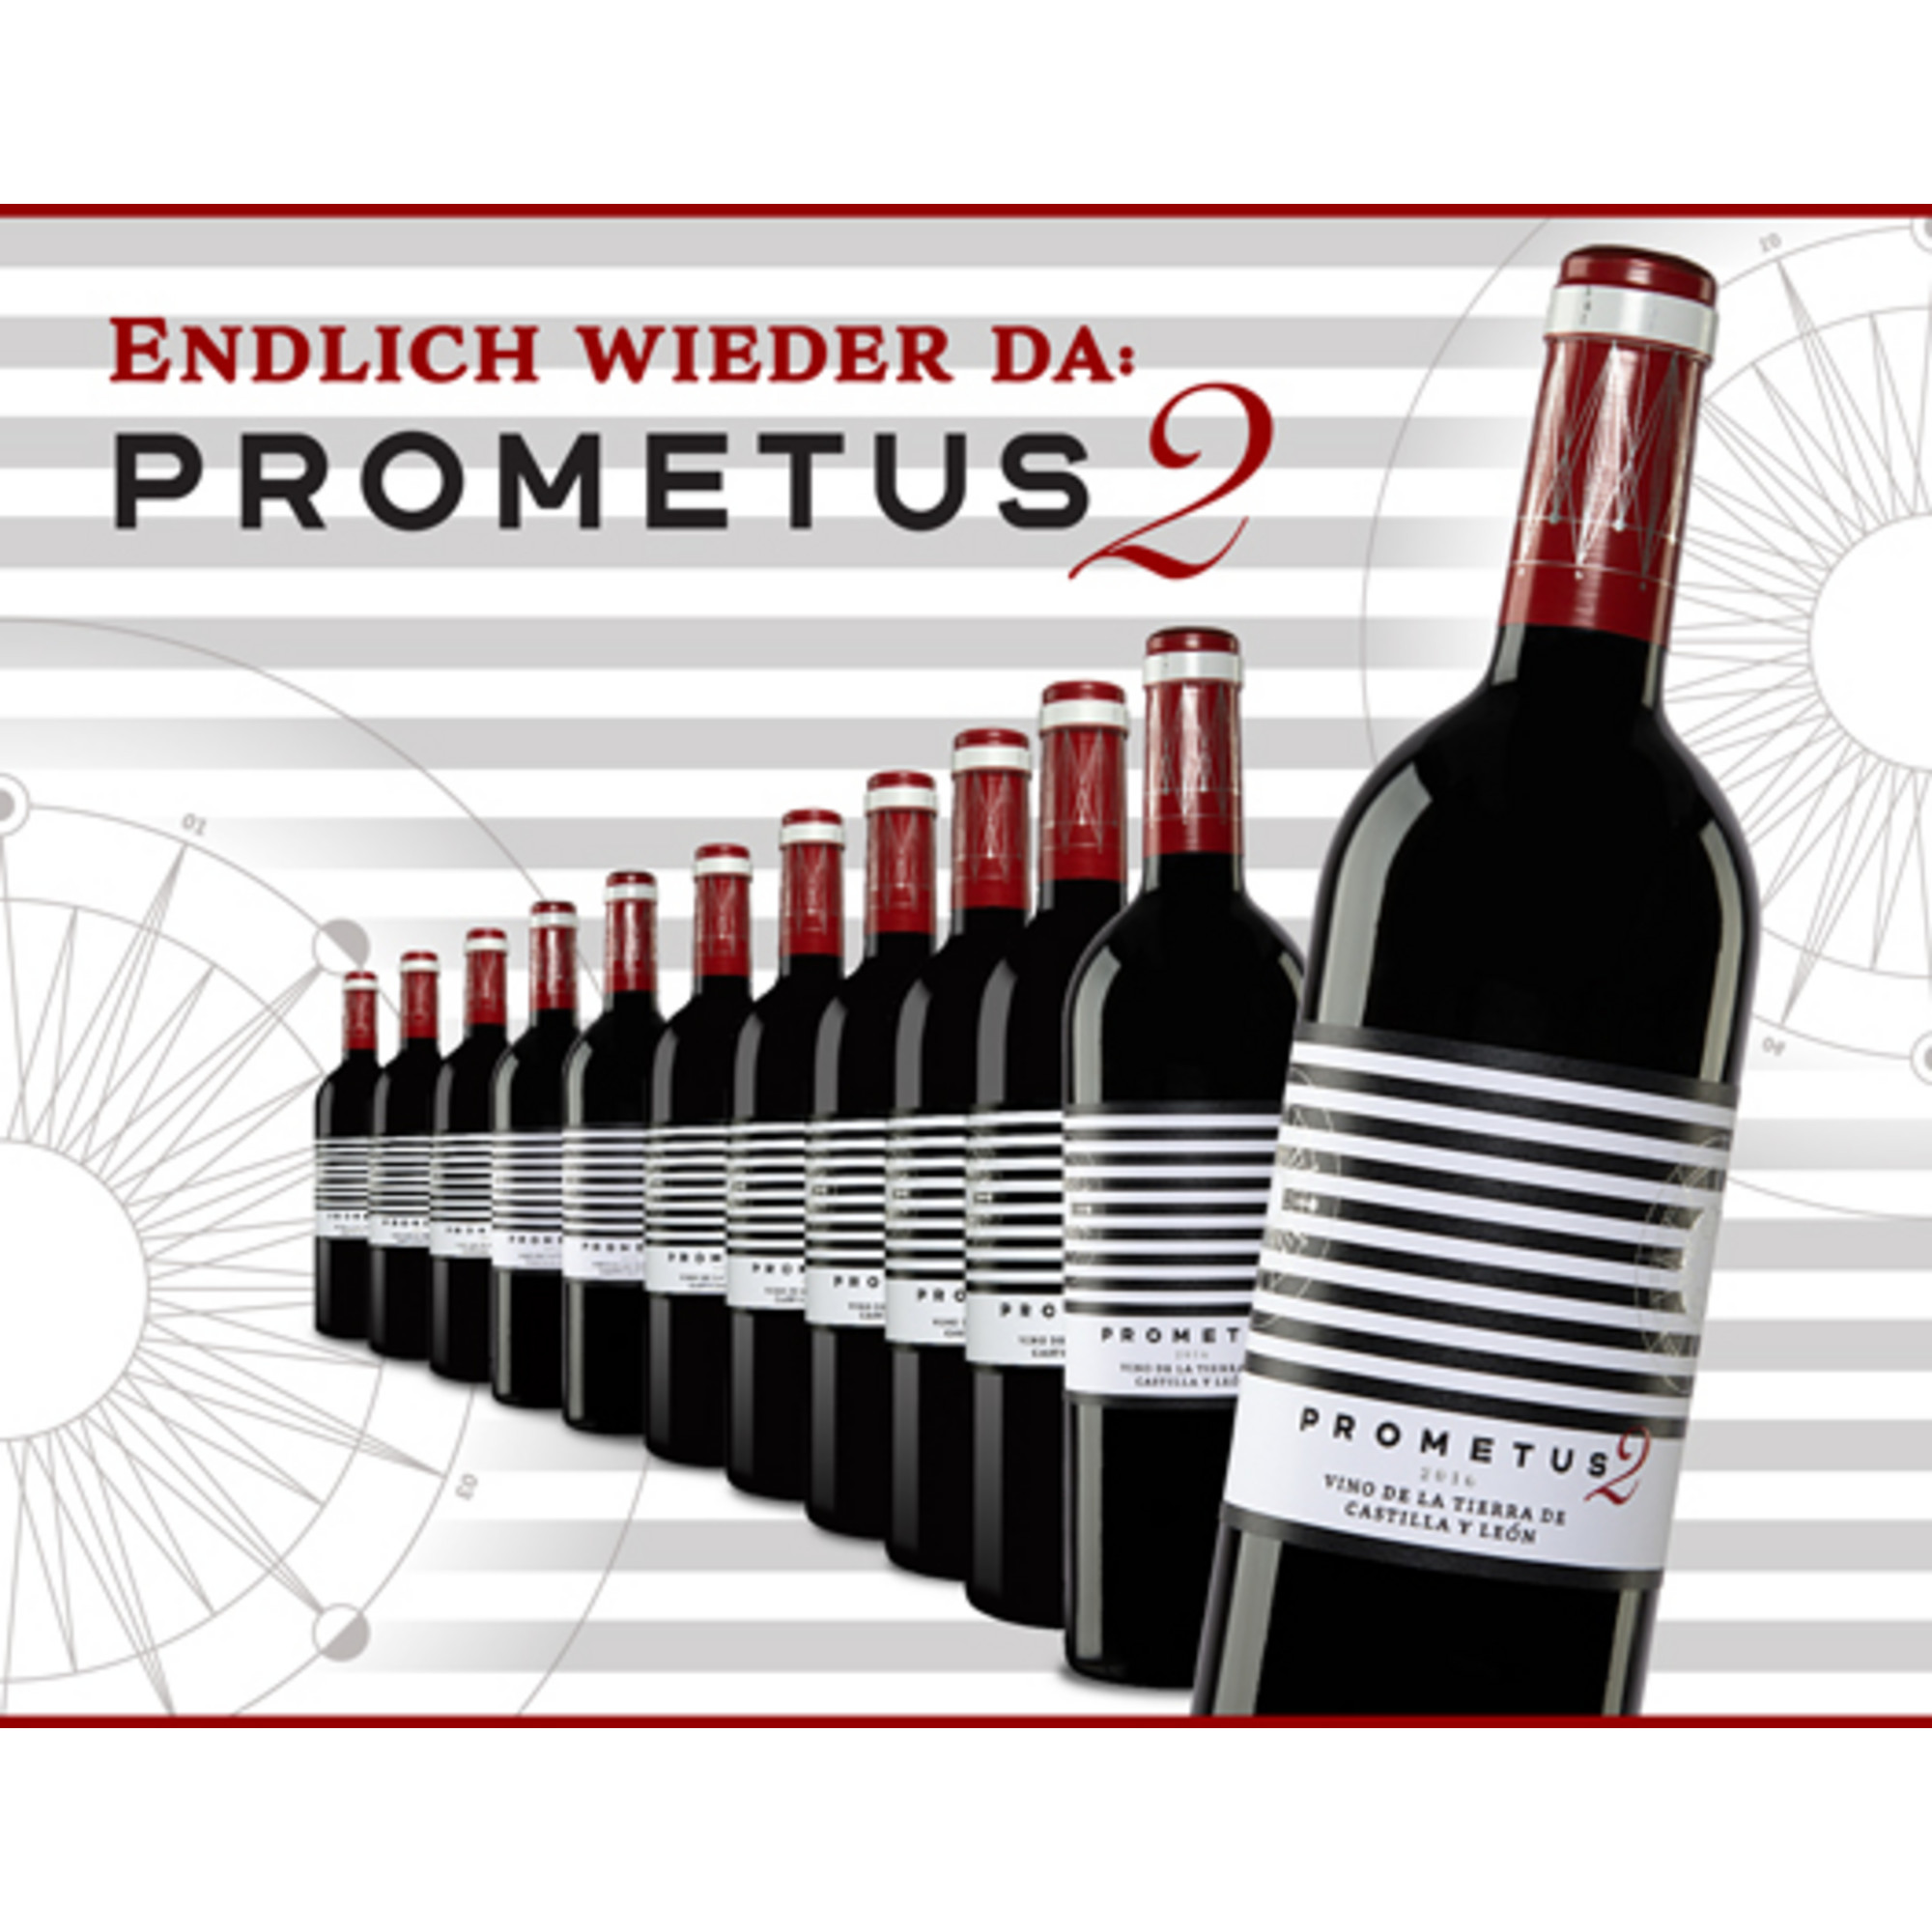 E*Special - Prometus 2 2016  9L 14% Vol. Trocken Weinpaket aus Spanien 24002 vinos DE